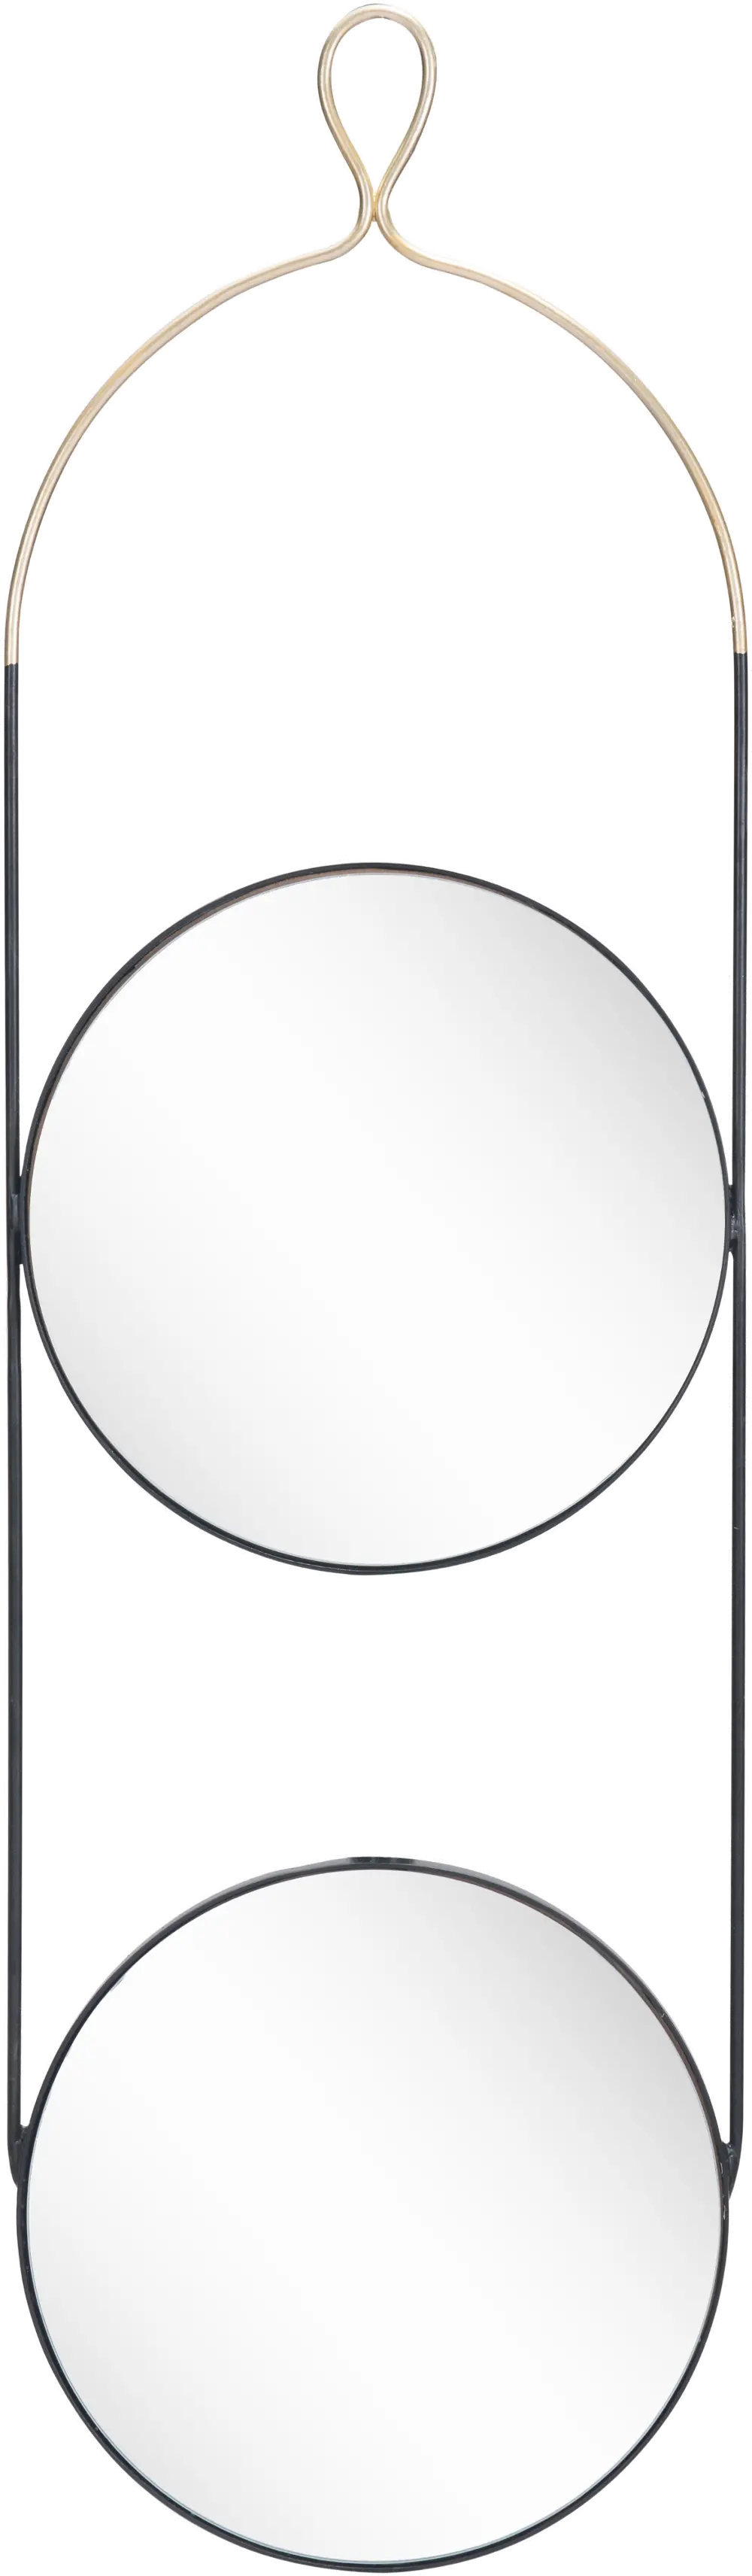 Gold and Black Round Wall Mirror - Zodiac-1